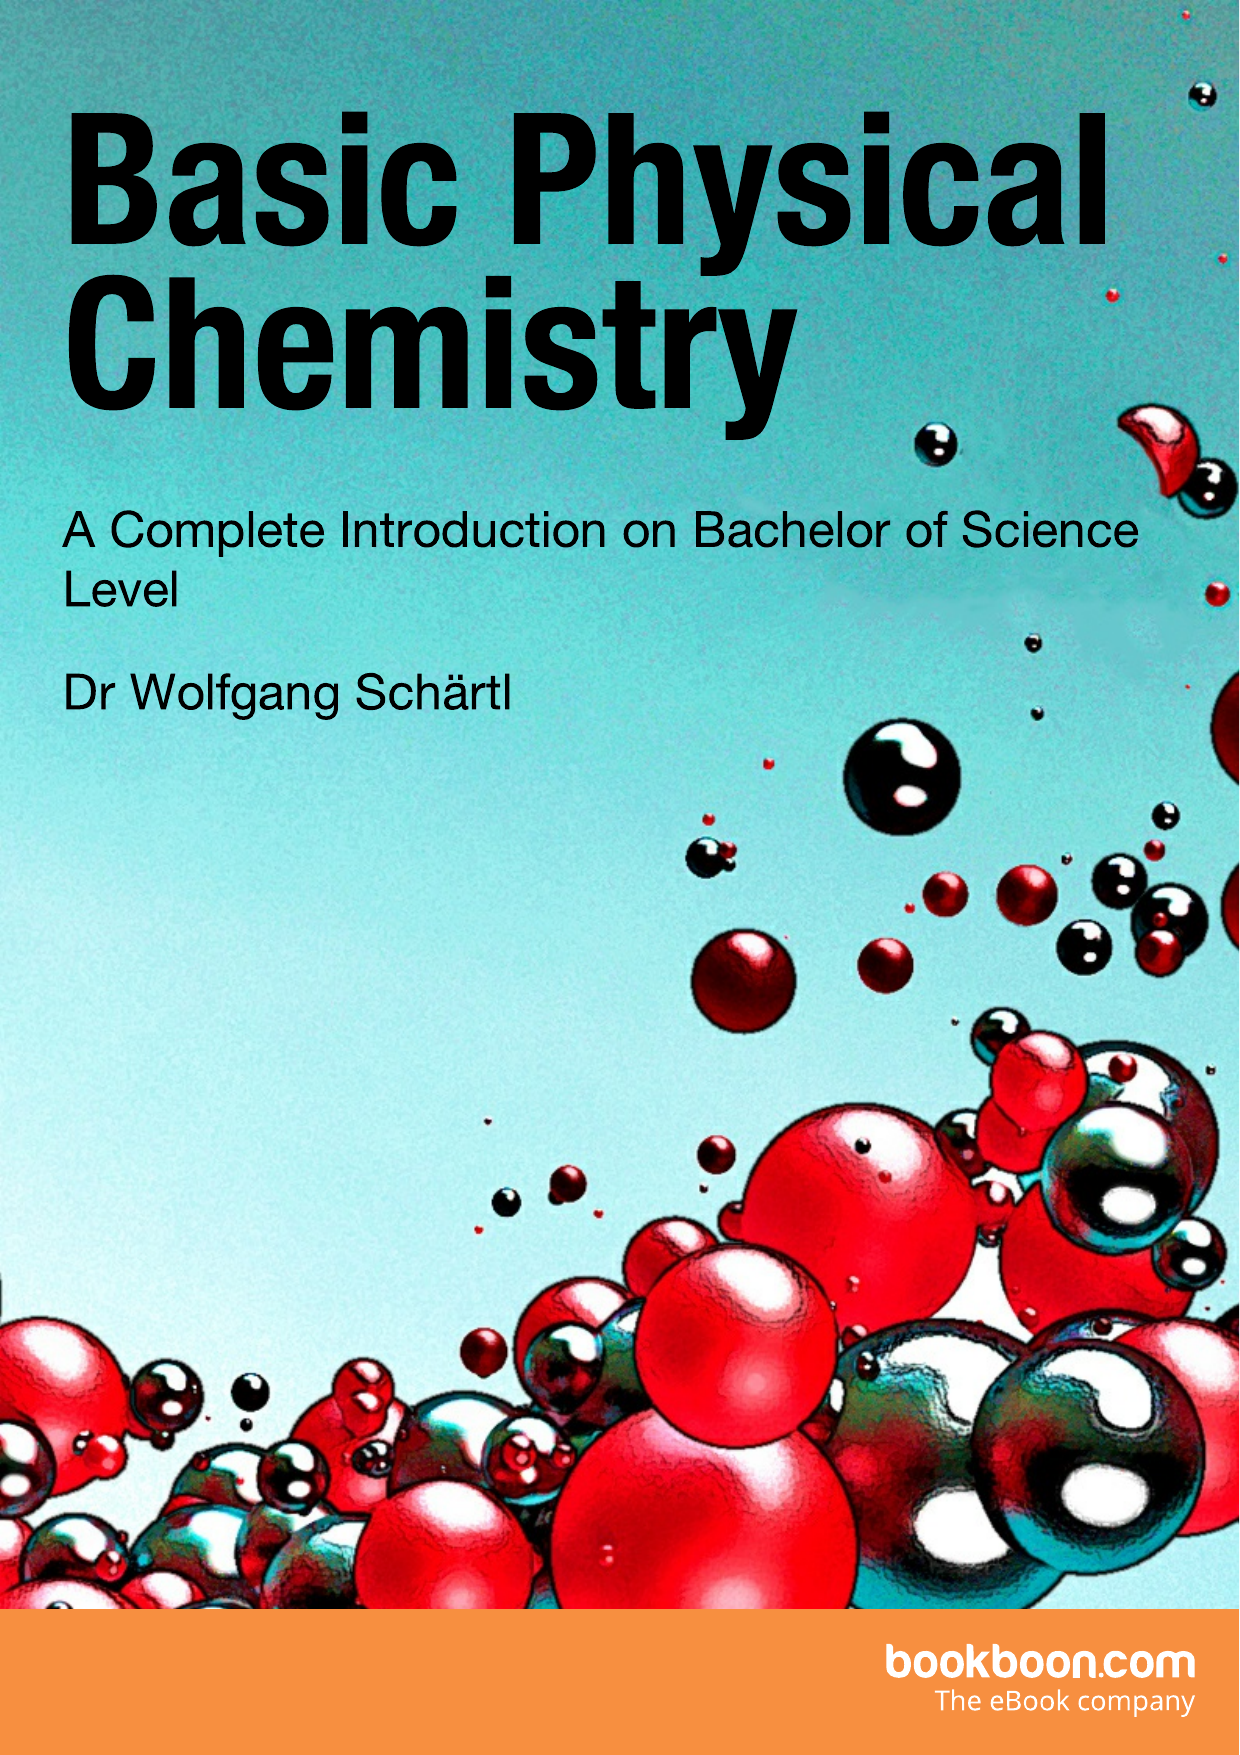 Physical chemistry. Basic химия. Physical Chemistry Chemical physics. Introduction Chemistry.